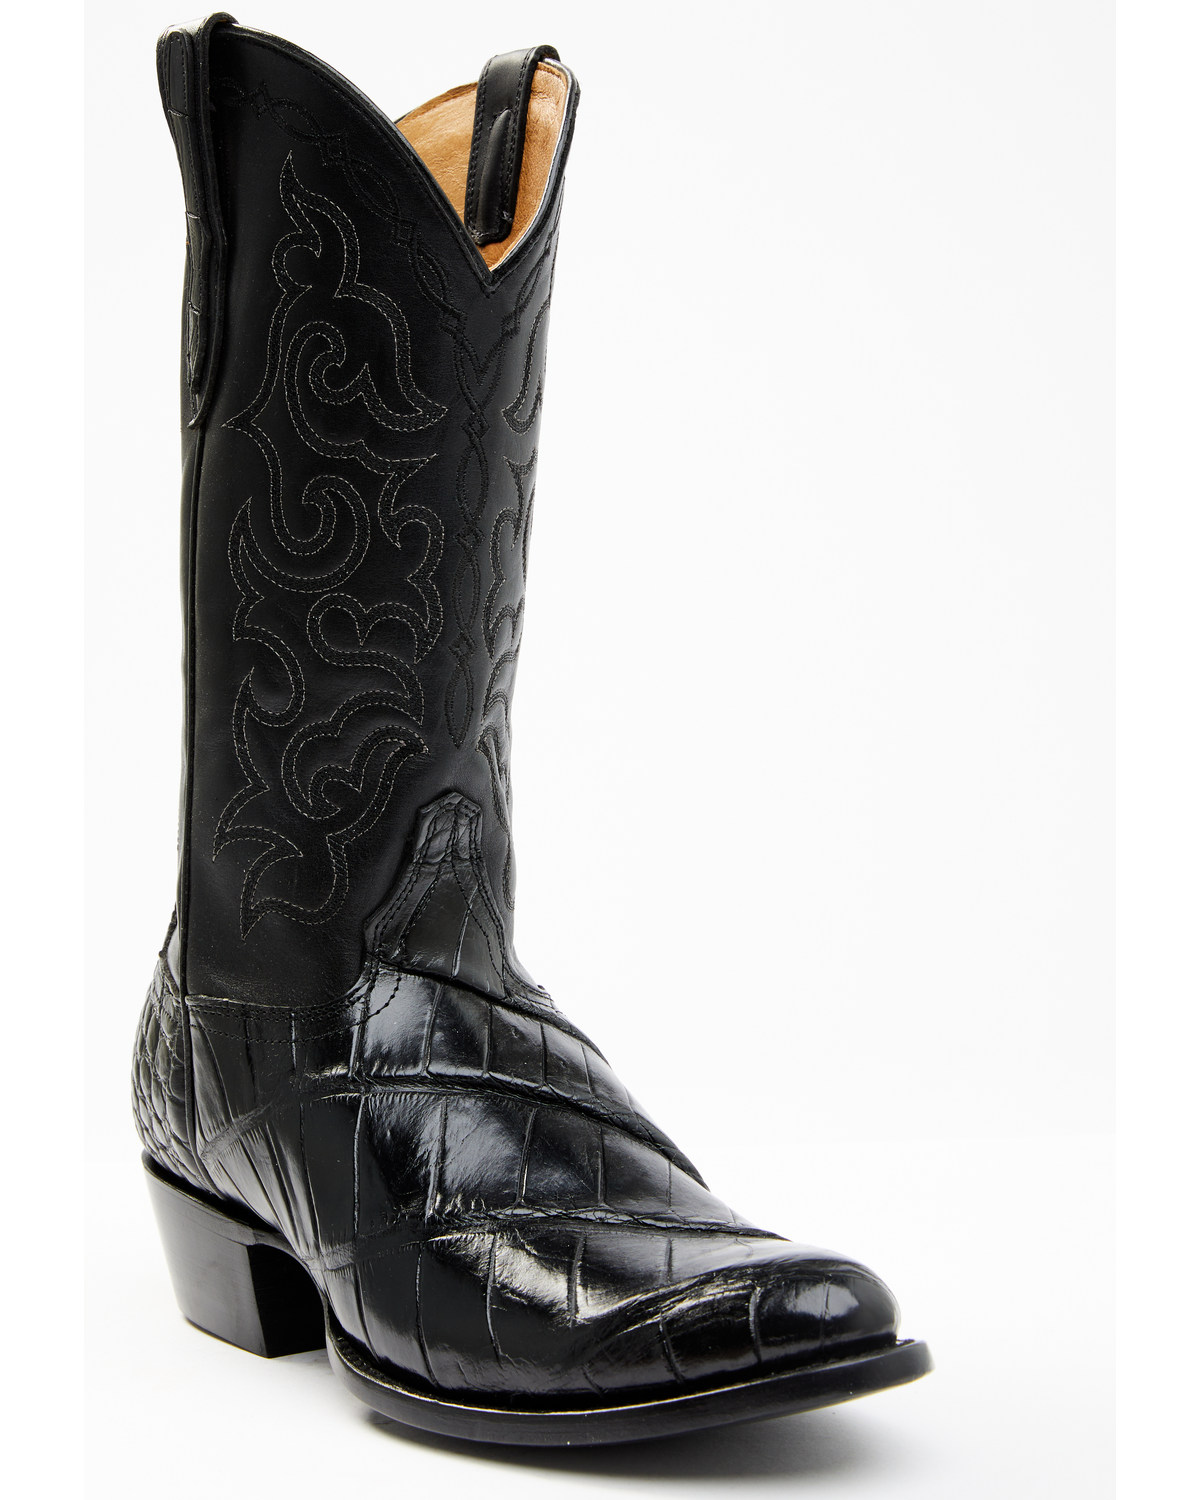 Cody James Men's Exotic American Alligator Western Boots